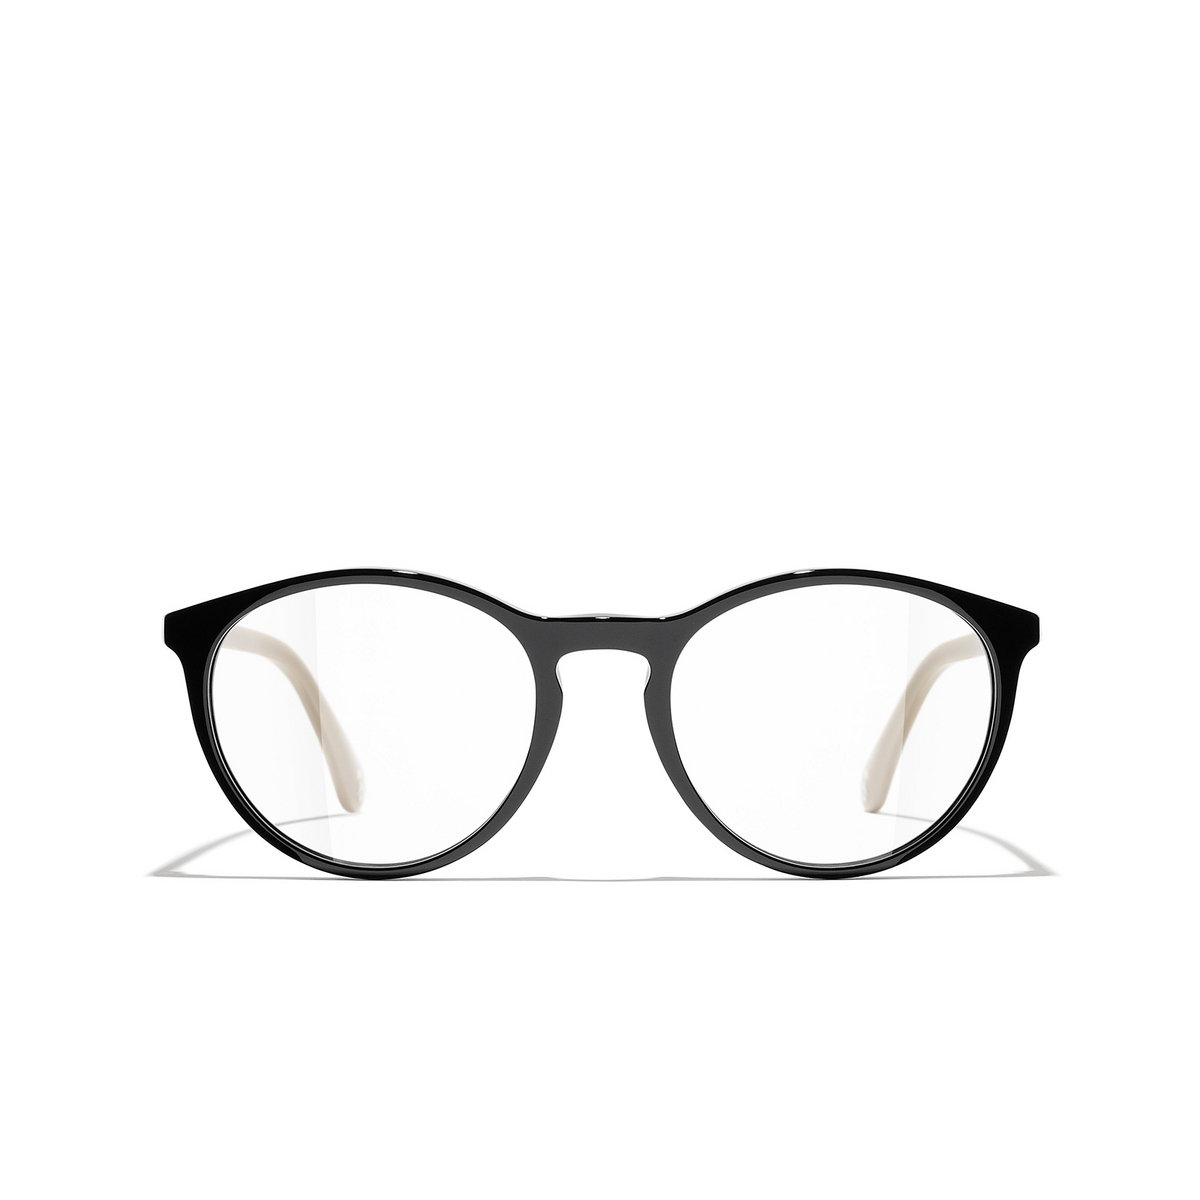 CHANEL pantos Eyeglasses C942 Black & Beige - front view